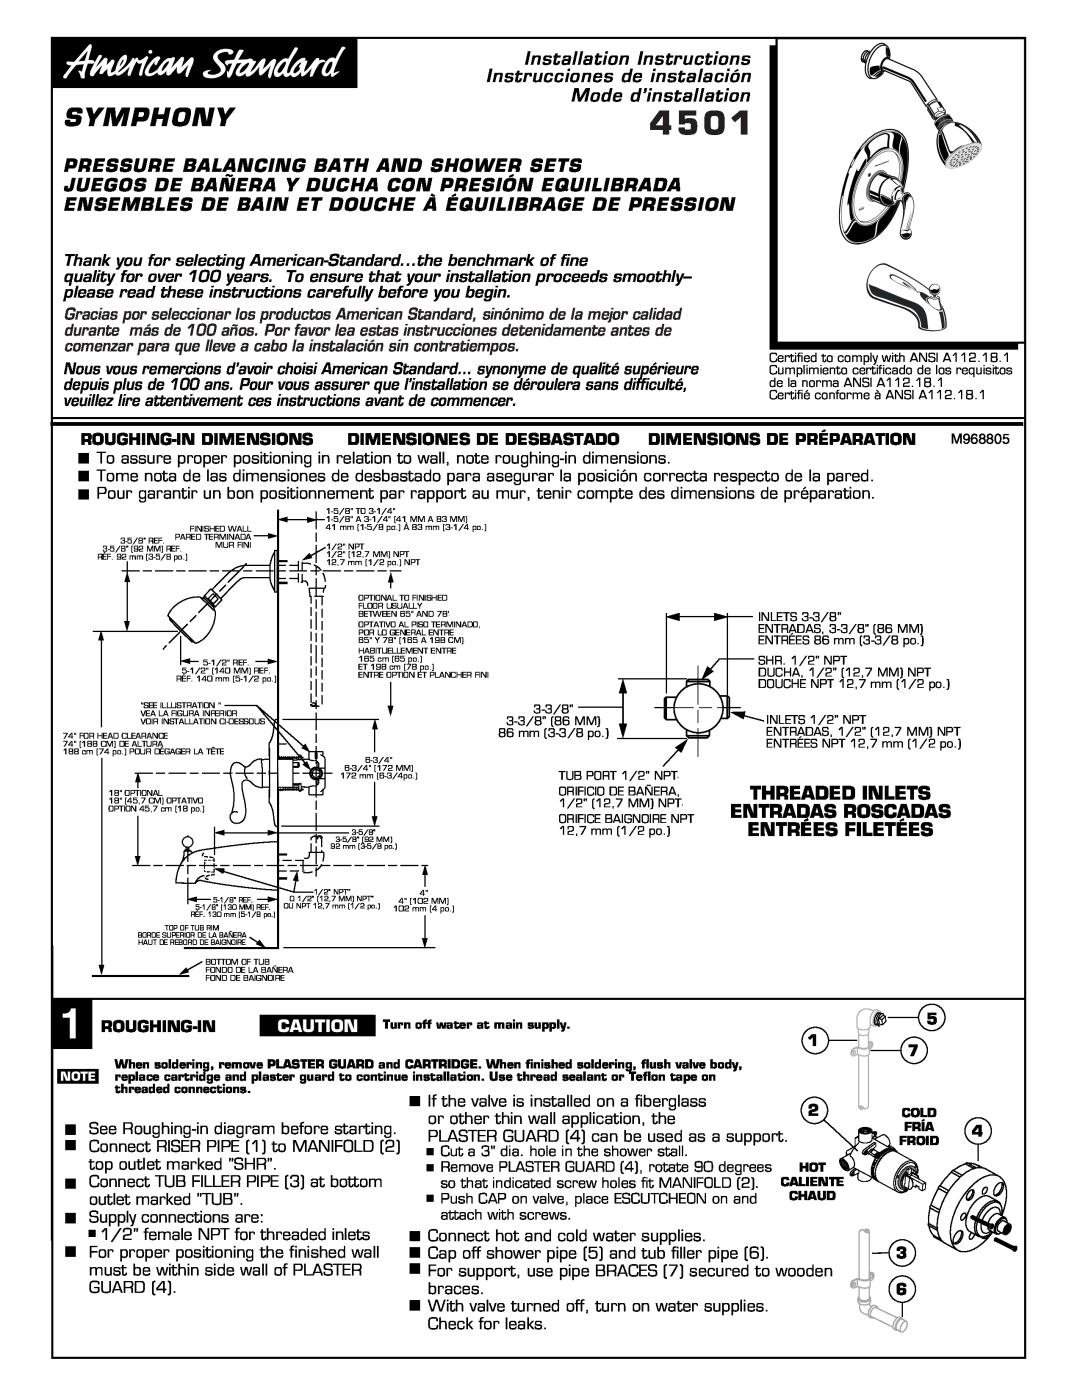 American Standard 4501 installation instructions Installation Instructions, 4 5 0 4 5 0 1 S, Symphony 